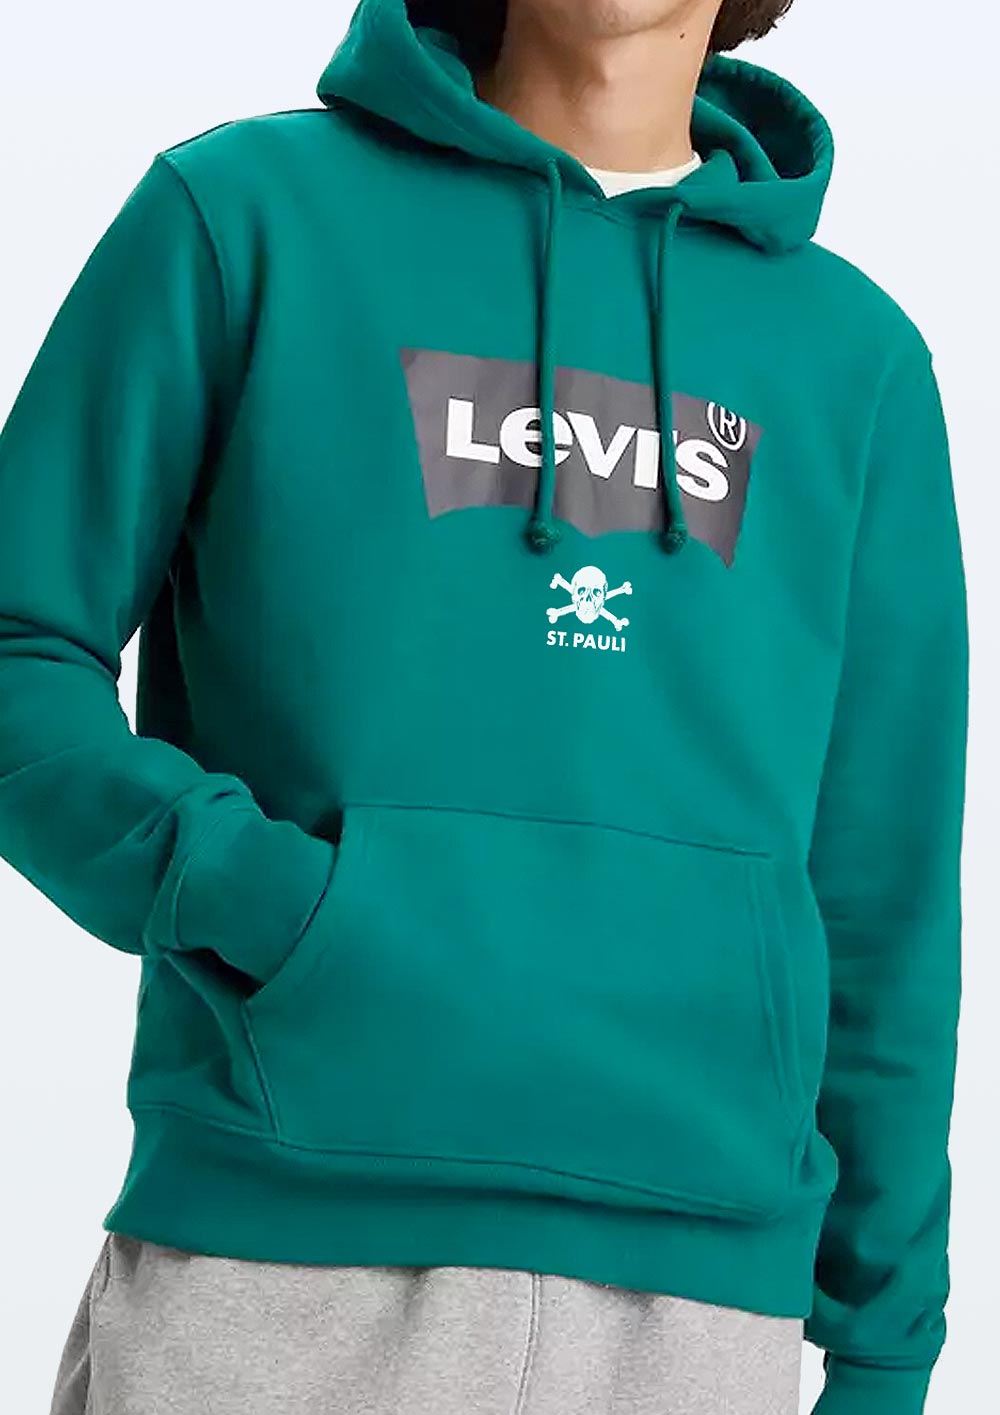 Levis x FCSP hoodie "Standard" green 